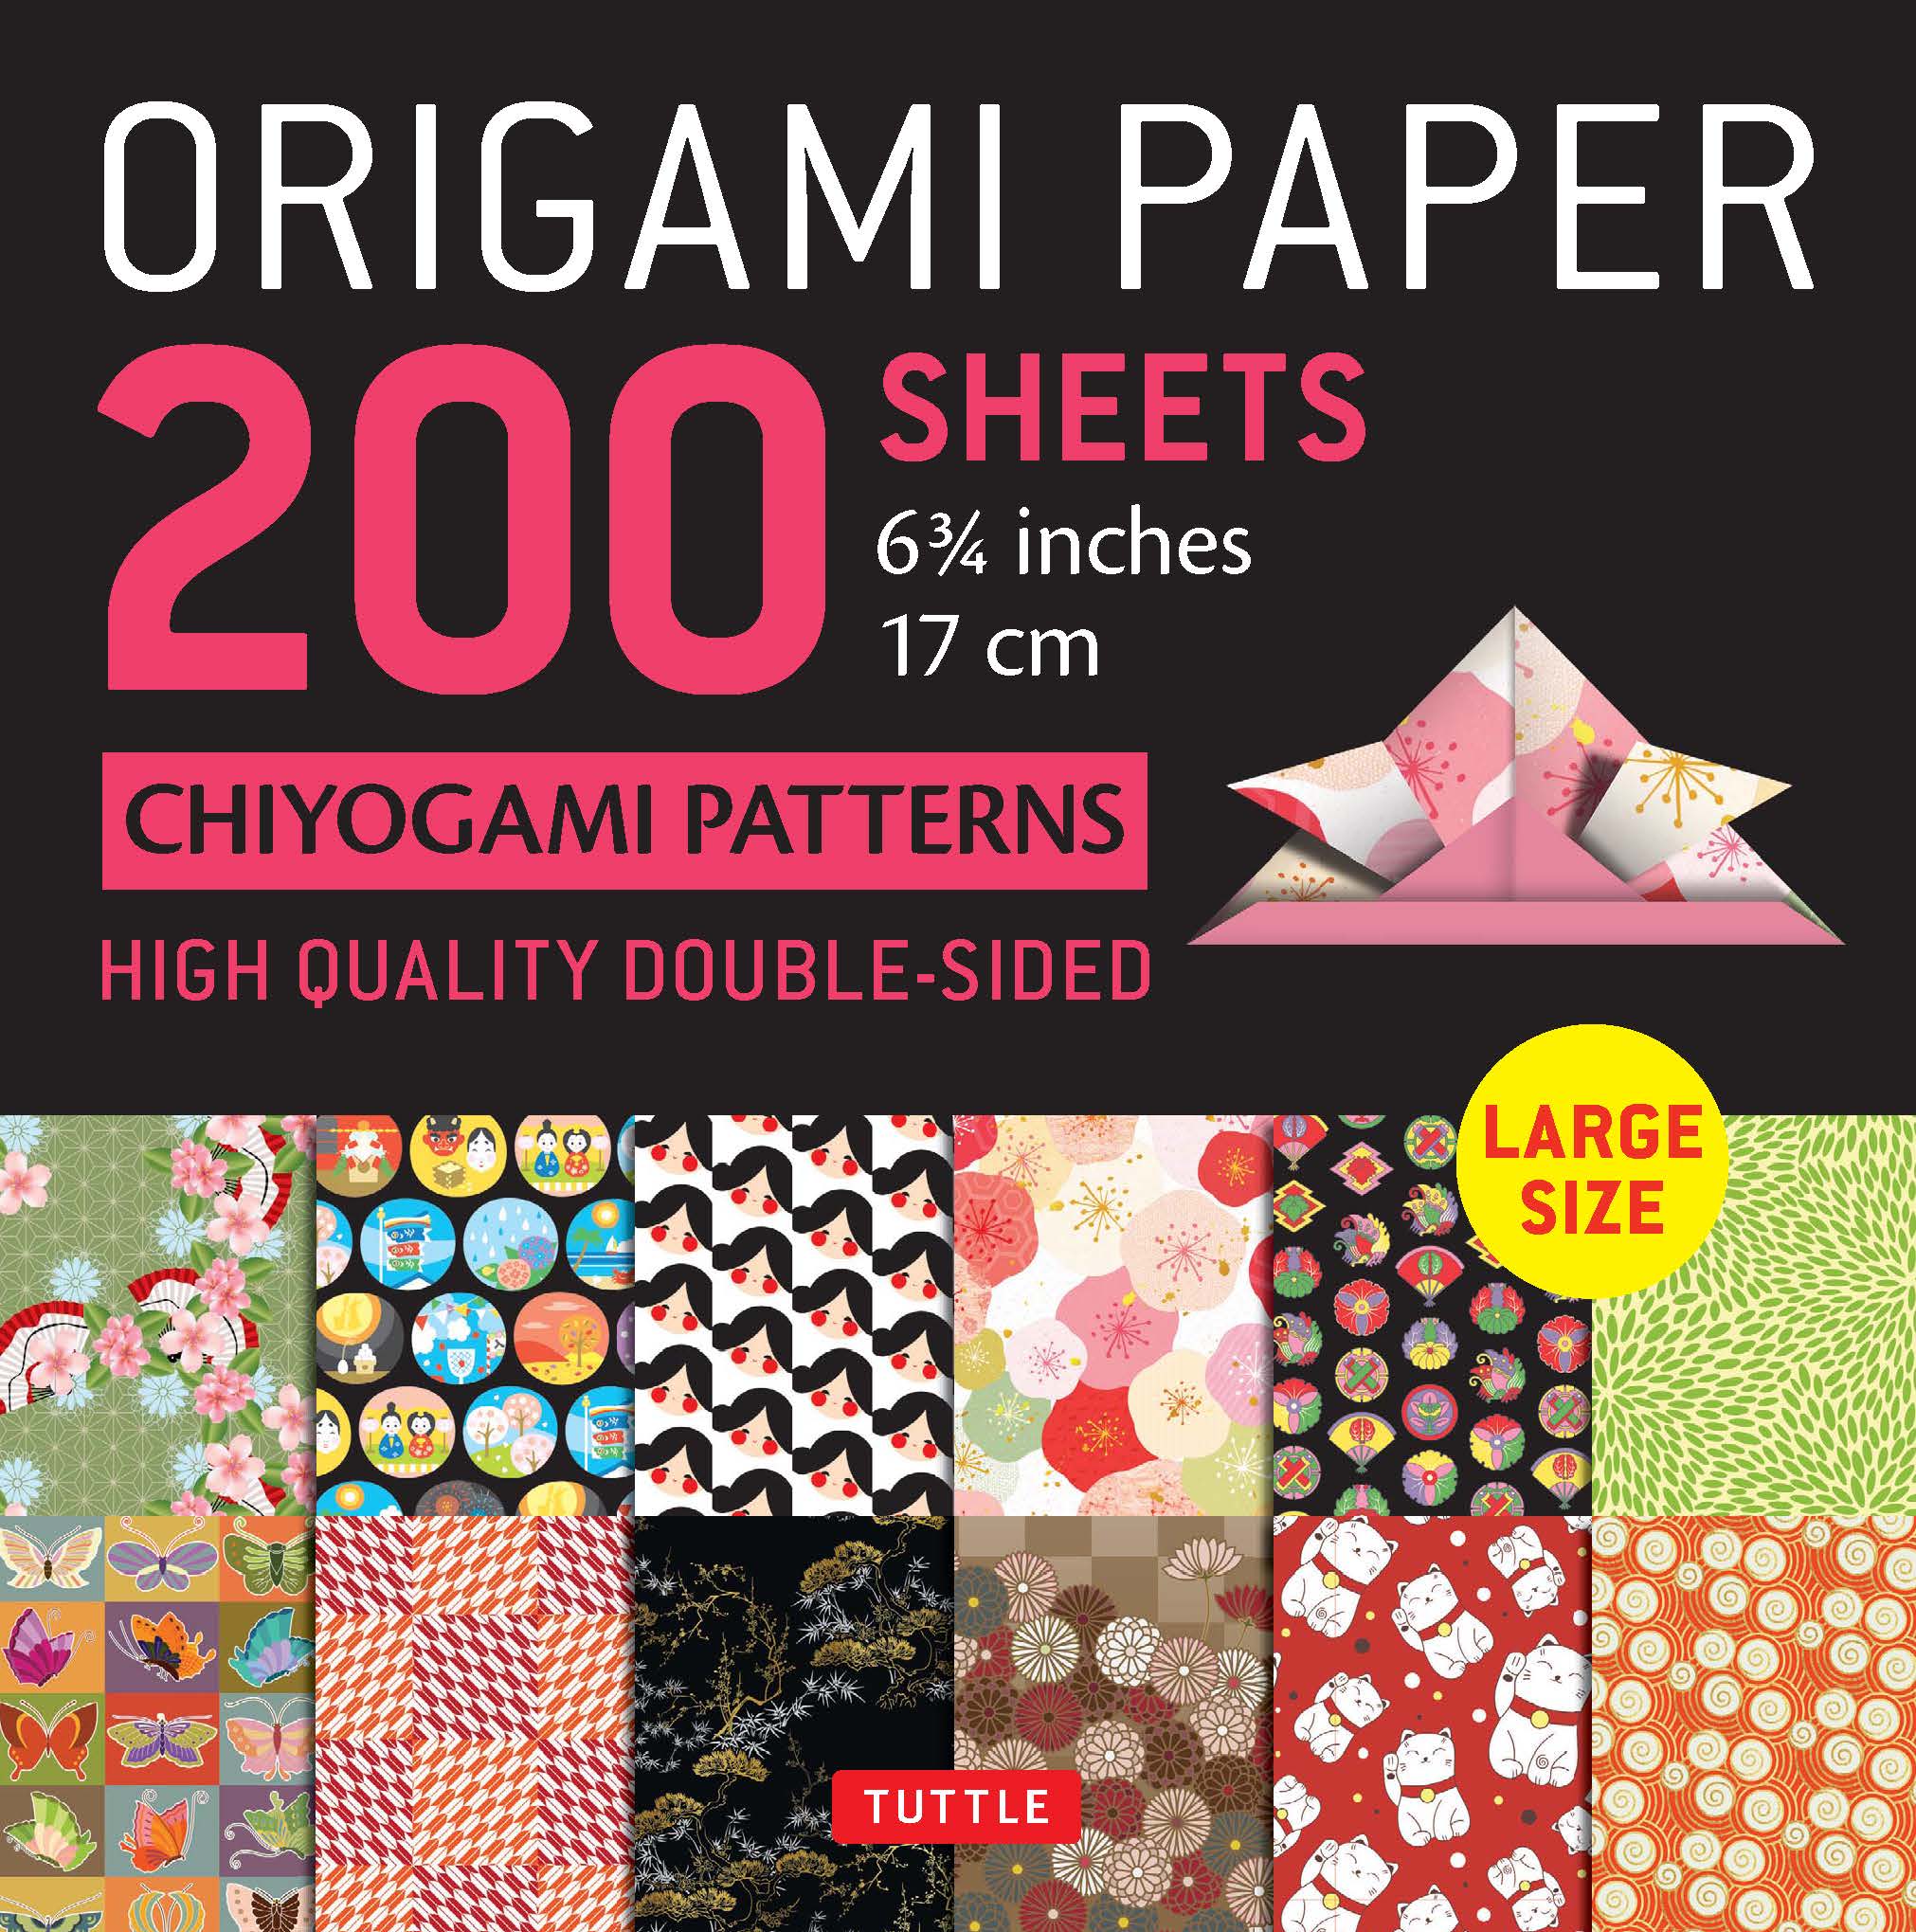 Large 200 Sheets Japanese Shibori Patterns Origami Paper – Paper